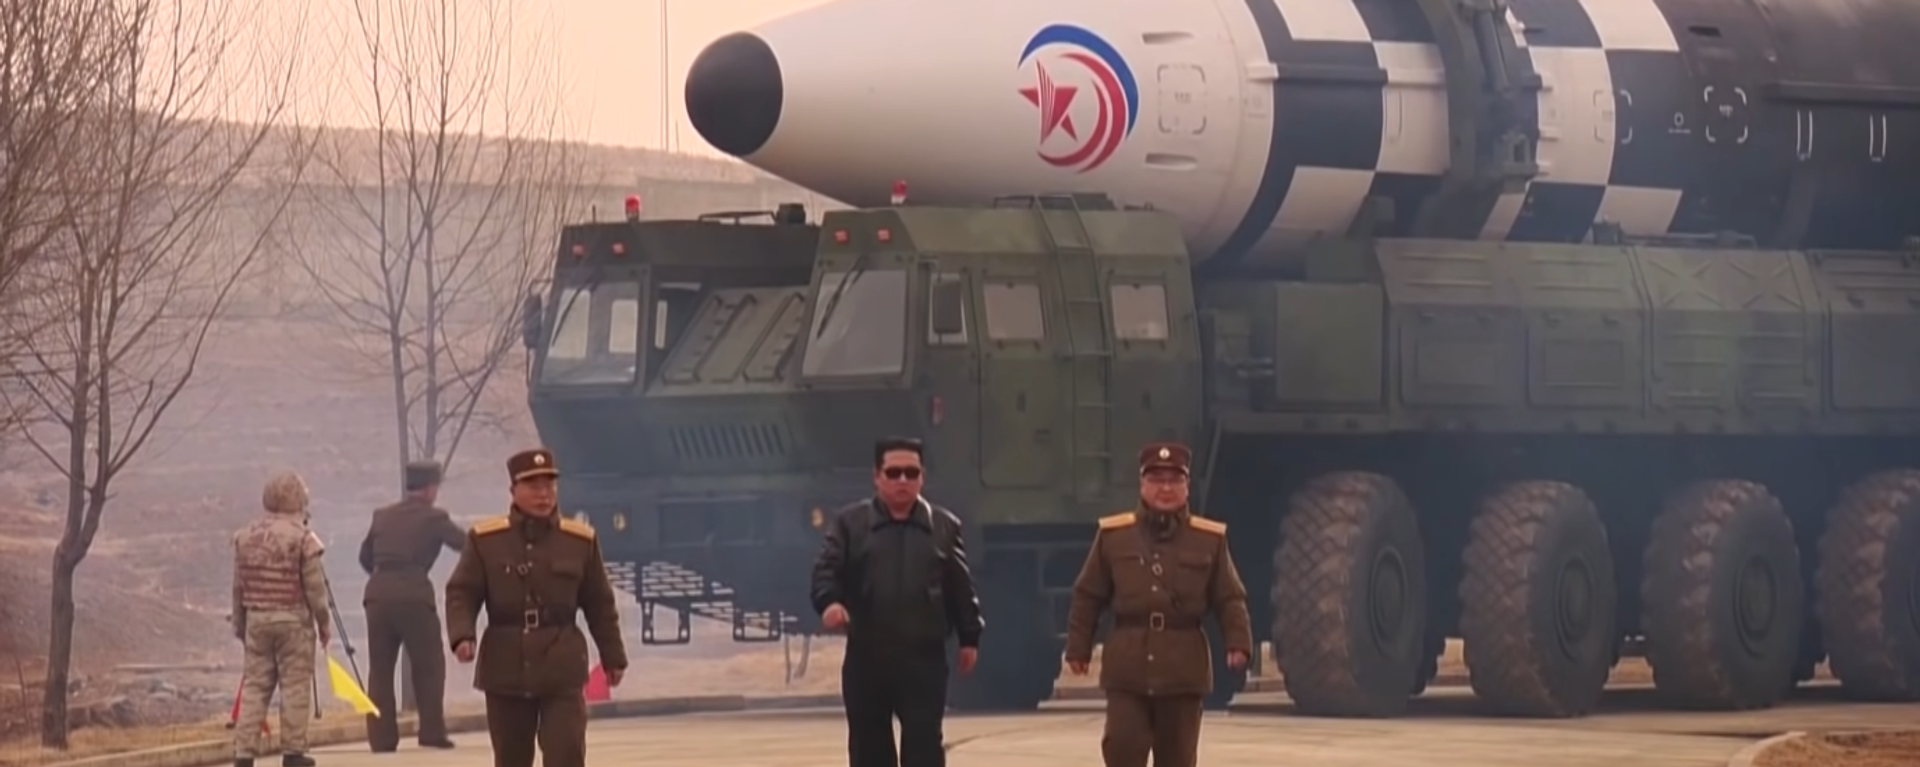 North Korean leader Kim Jong-un takes part in launch of heavy intercontinental ballistic missile test. - Sputnik International, 1920, 09.09.2022